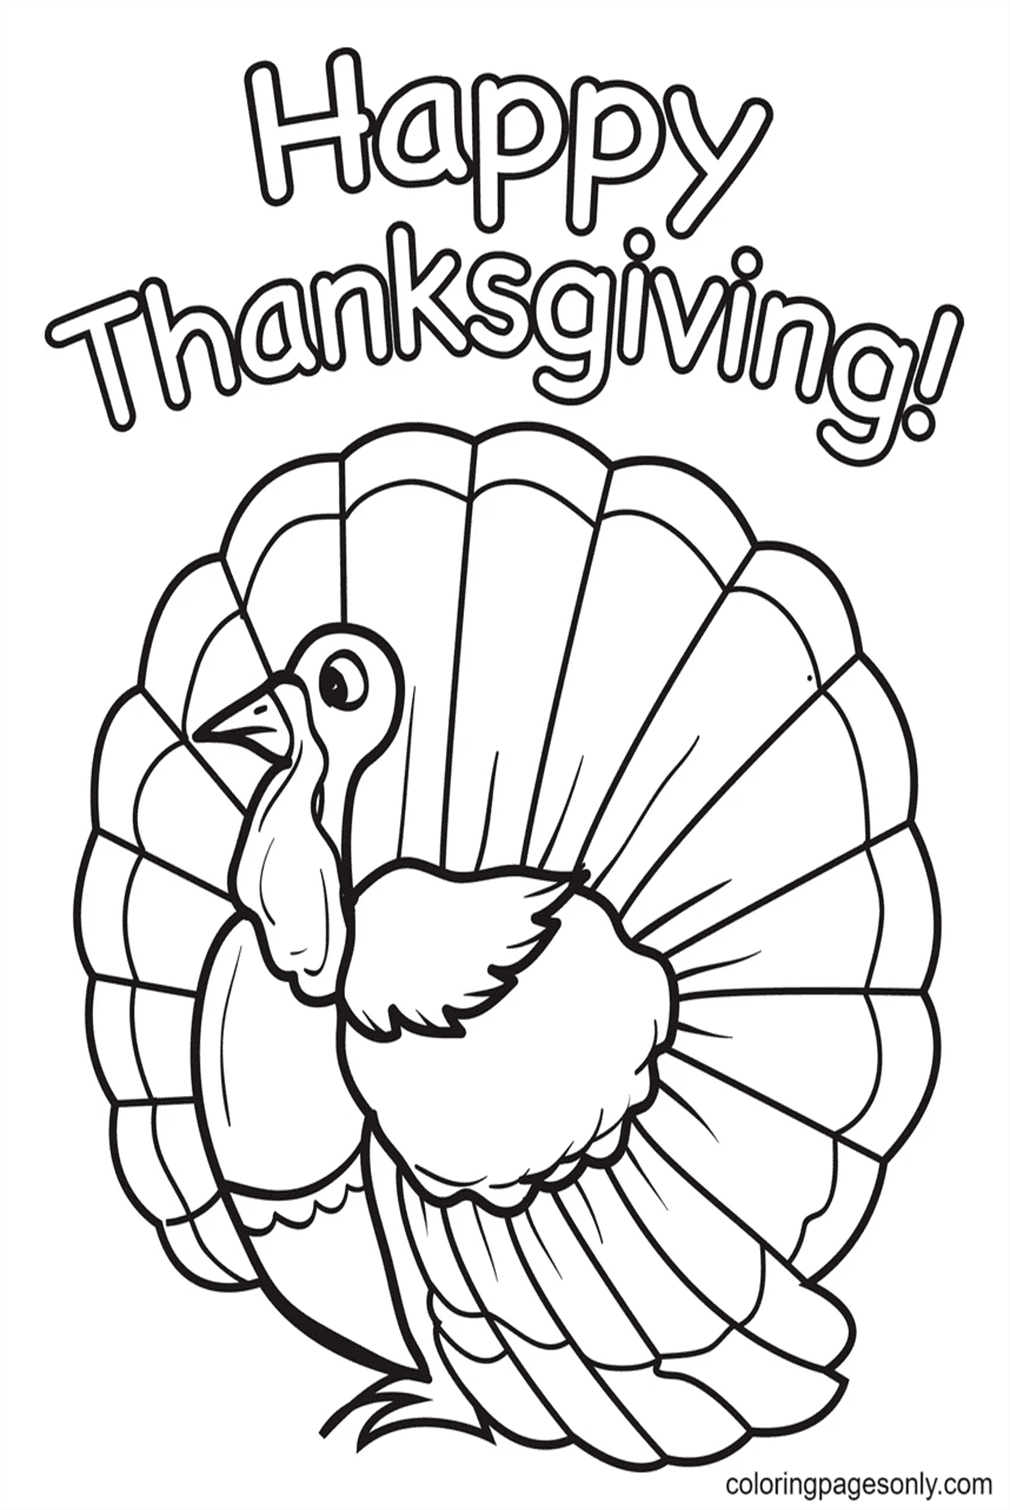 Printable Thanksgiving Turkey from Turkey